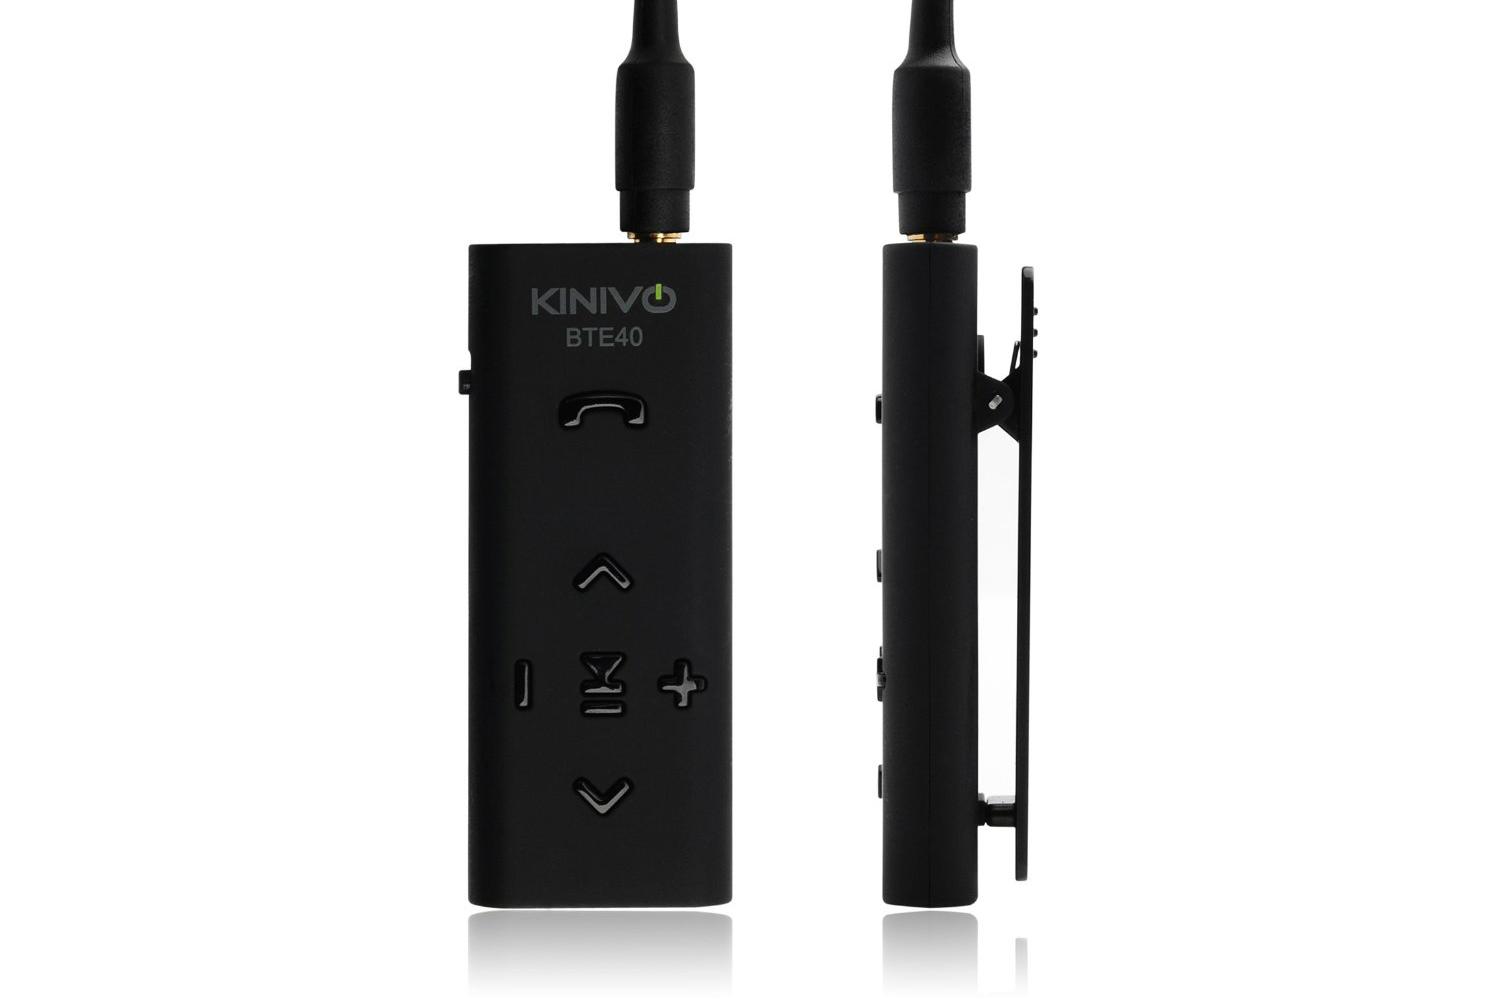 kinivos bte40 makes any headphones or home stereo wireless 4